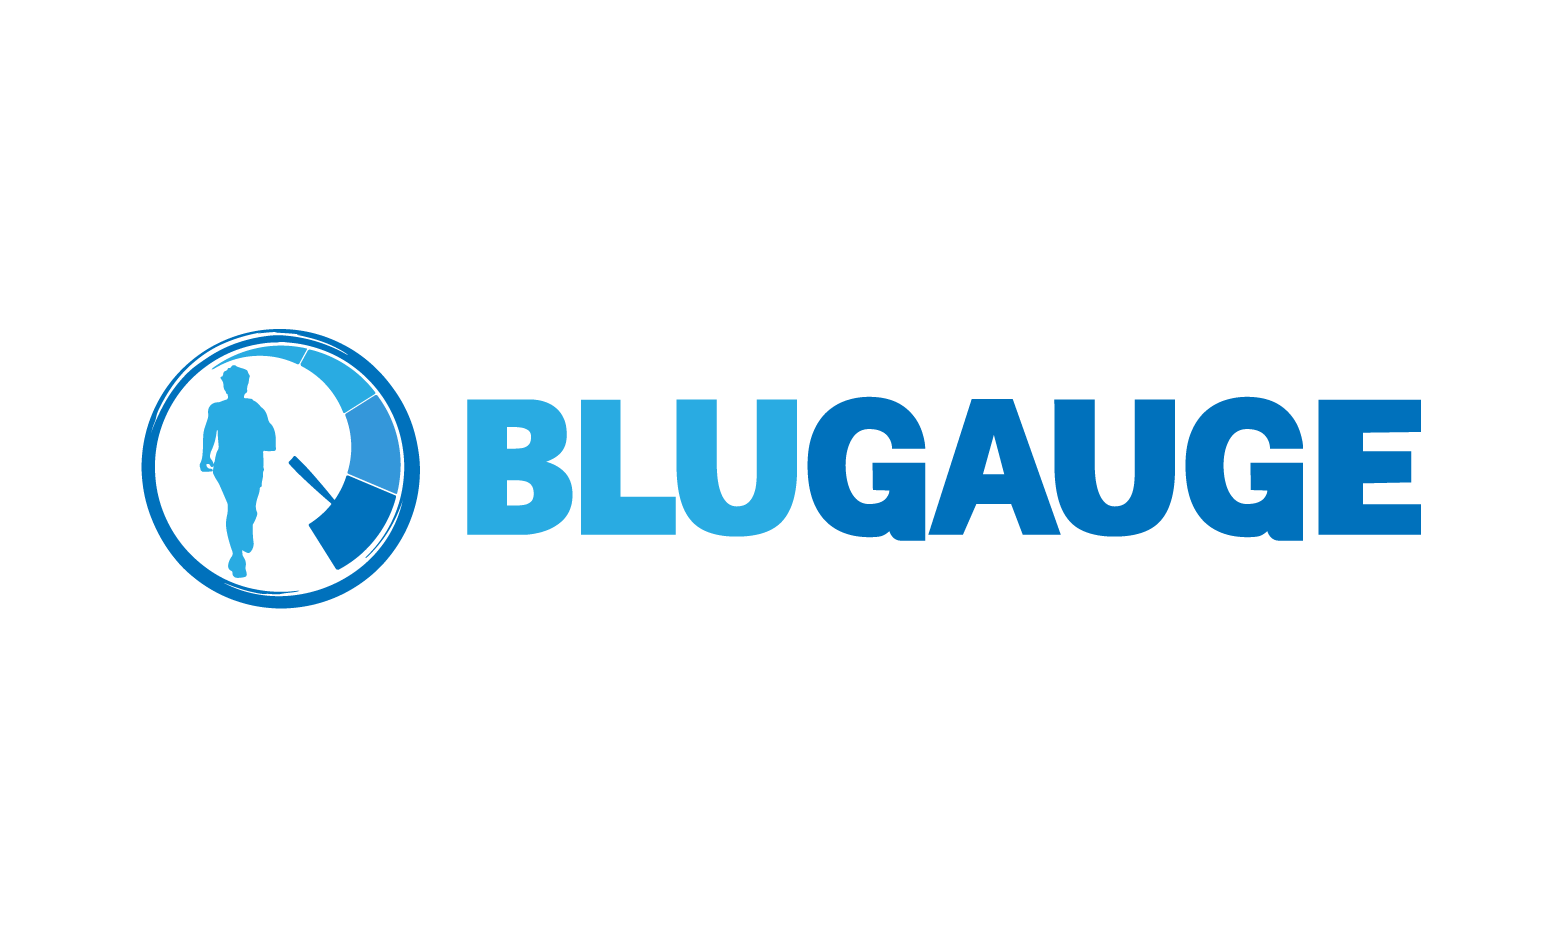 BluGauge.com - Creative brandable domain for sale